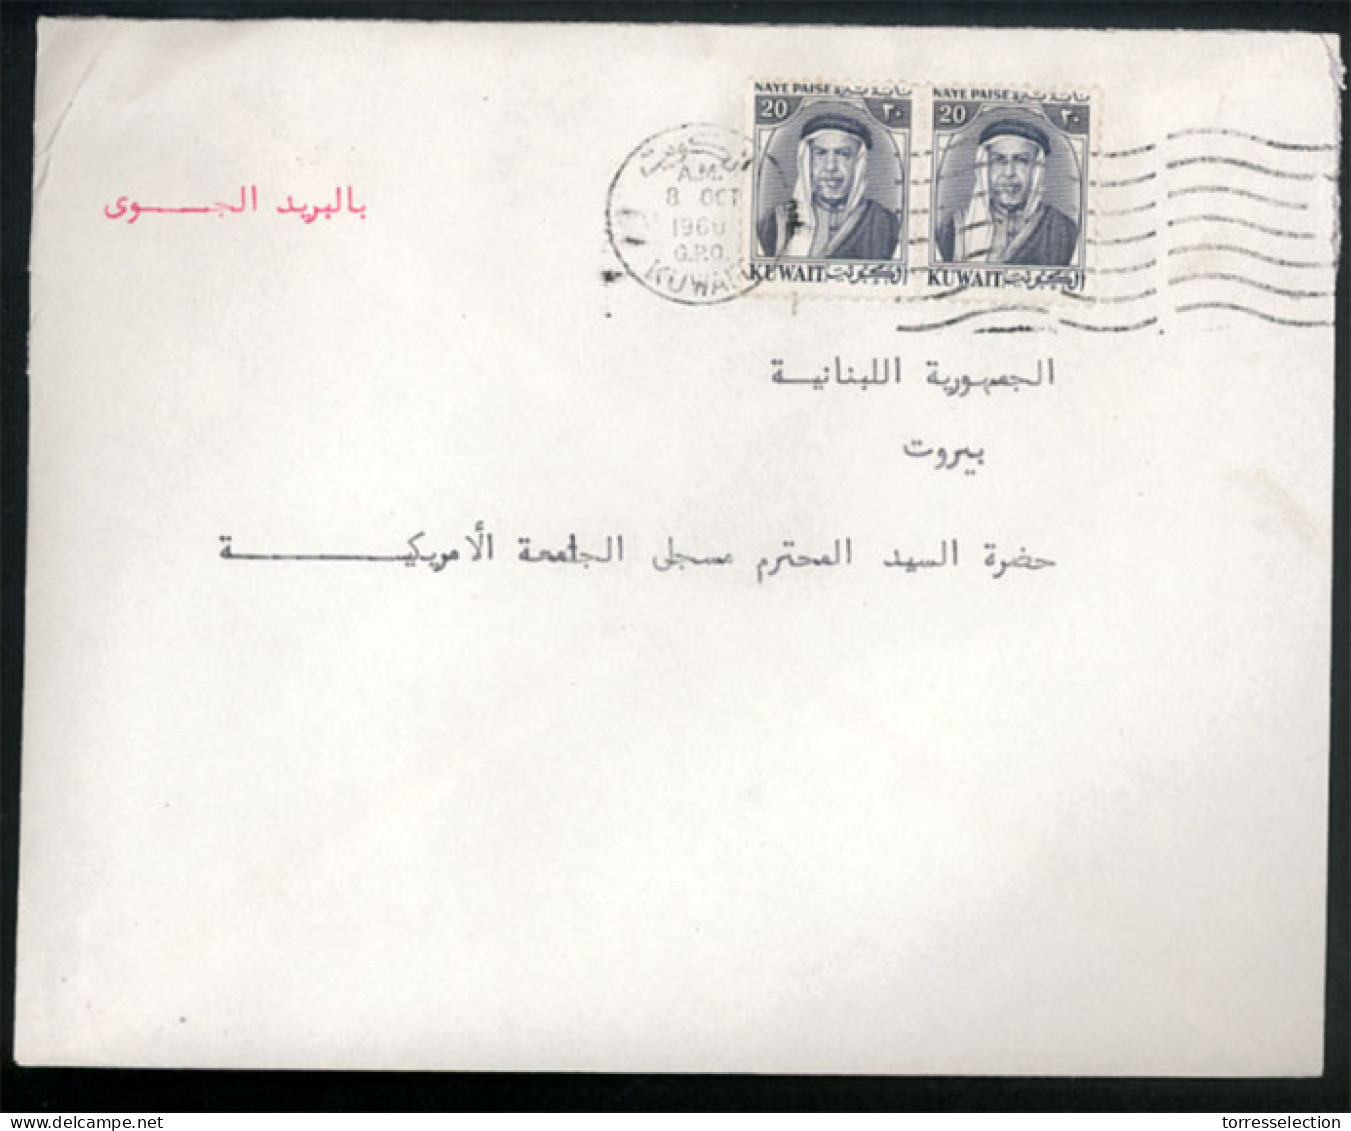 KUWAIT. 1960(8 Oct). KUWAIT-LEBANON. Kuwait To Beyrouth. Franked Envelope. Unusual Destination Seldom Seen. - Kuwait